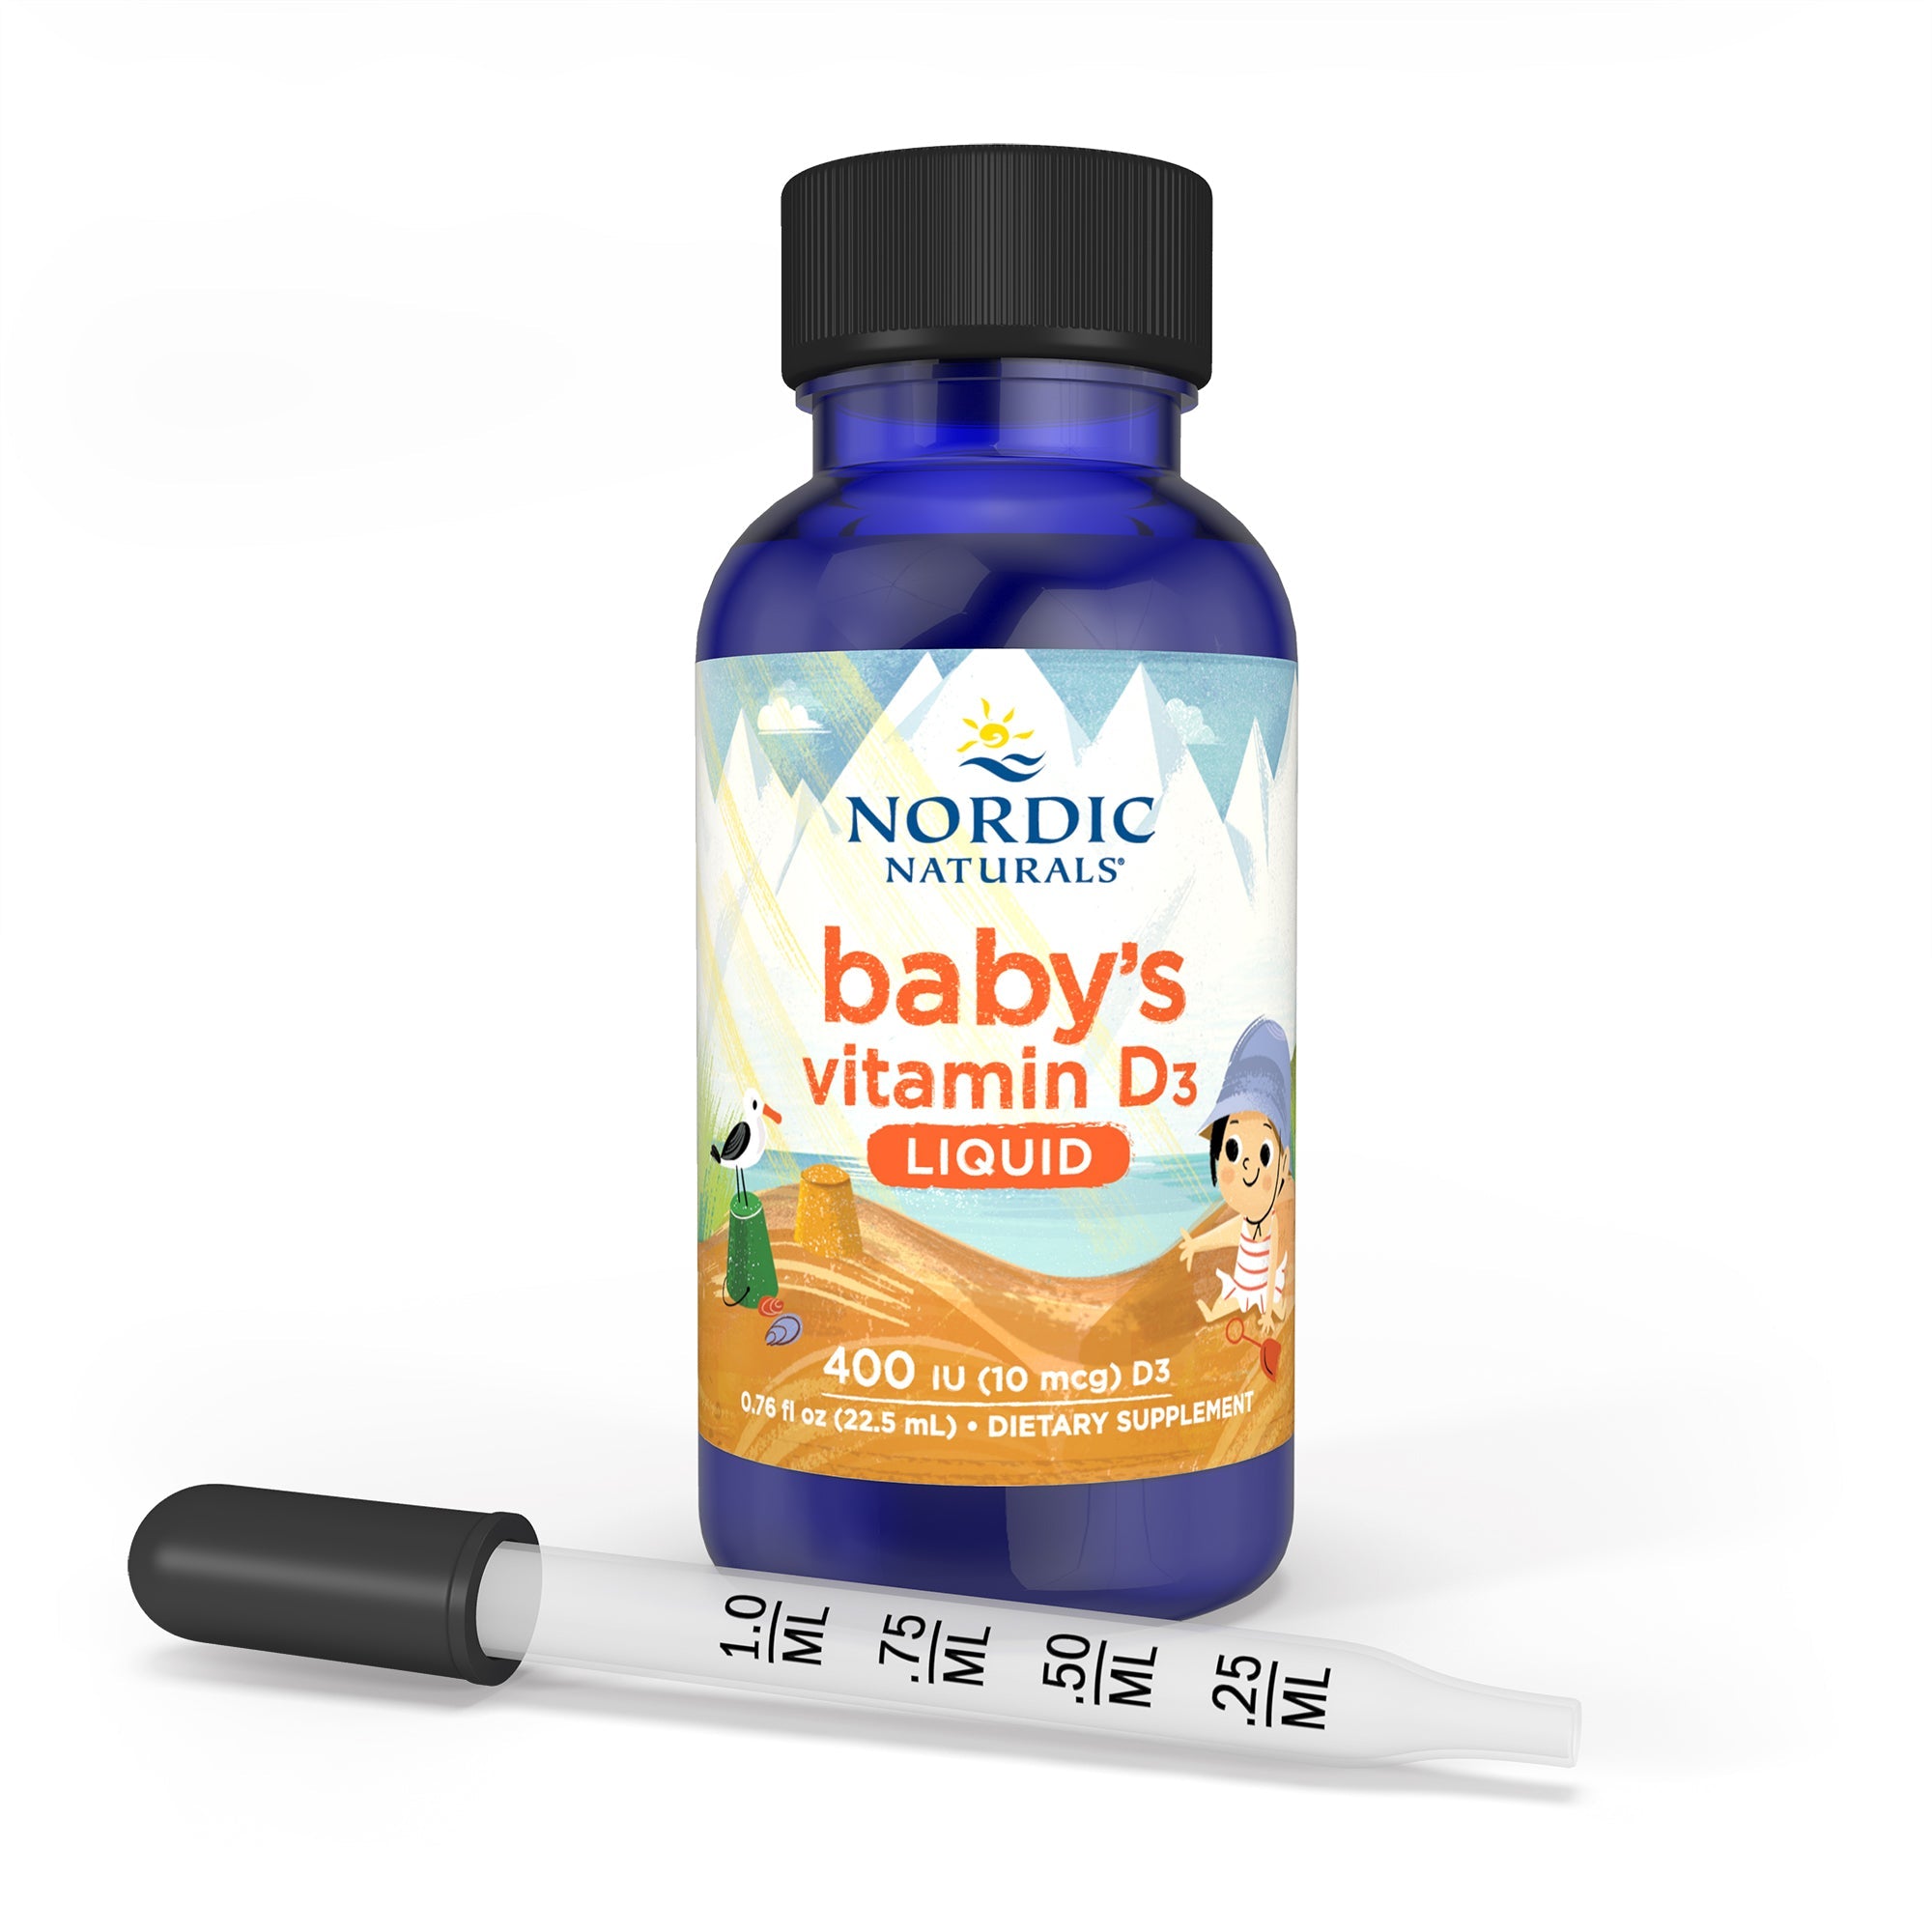 Nordic Naturals Baby's Vitamin D3 22.5ml